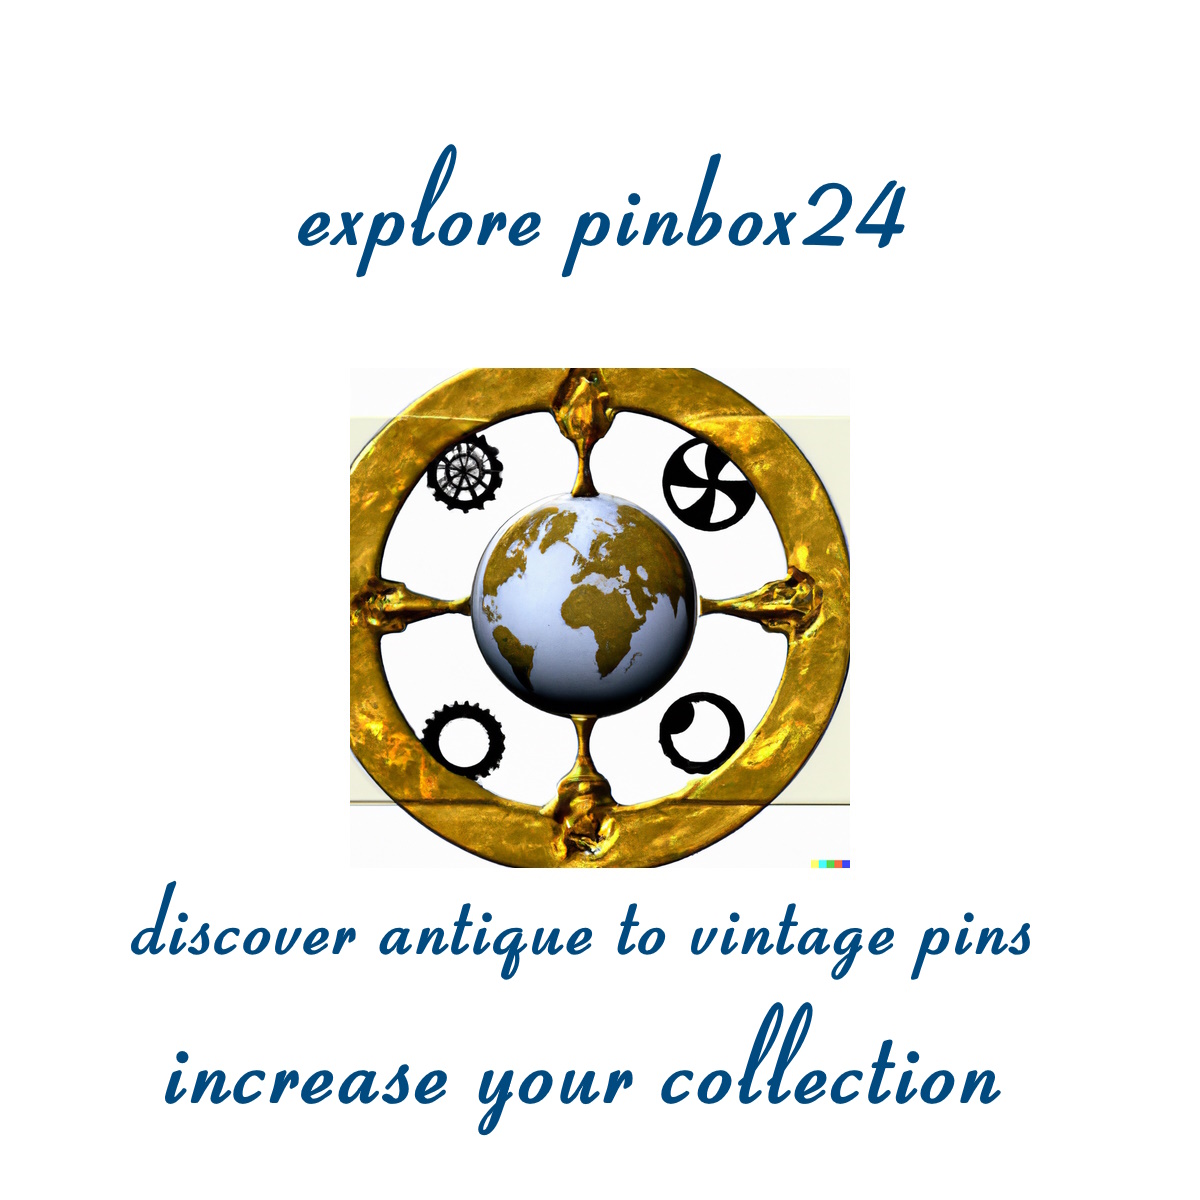 pinbox24 shop